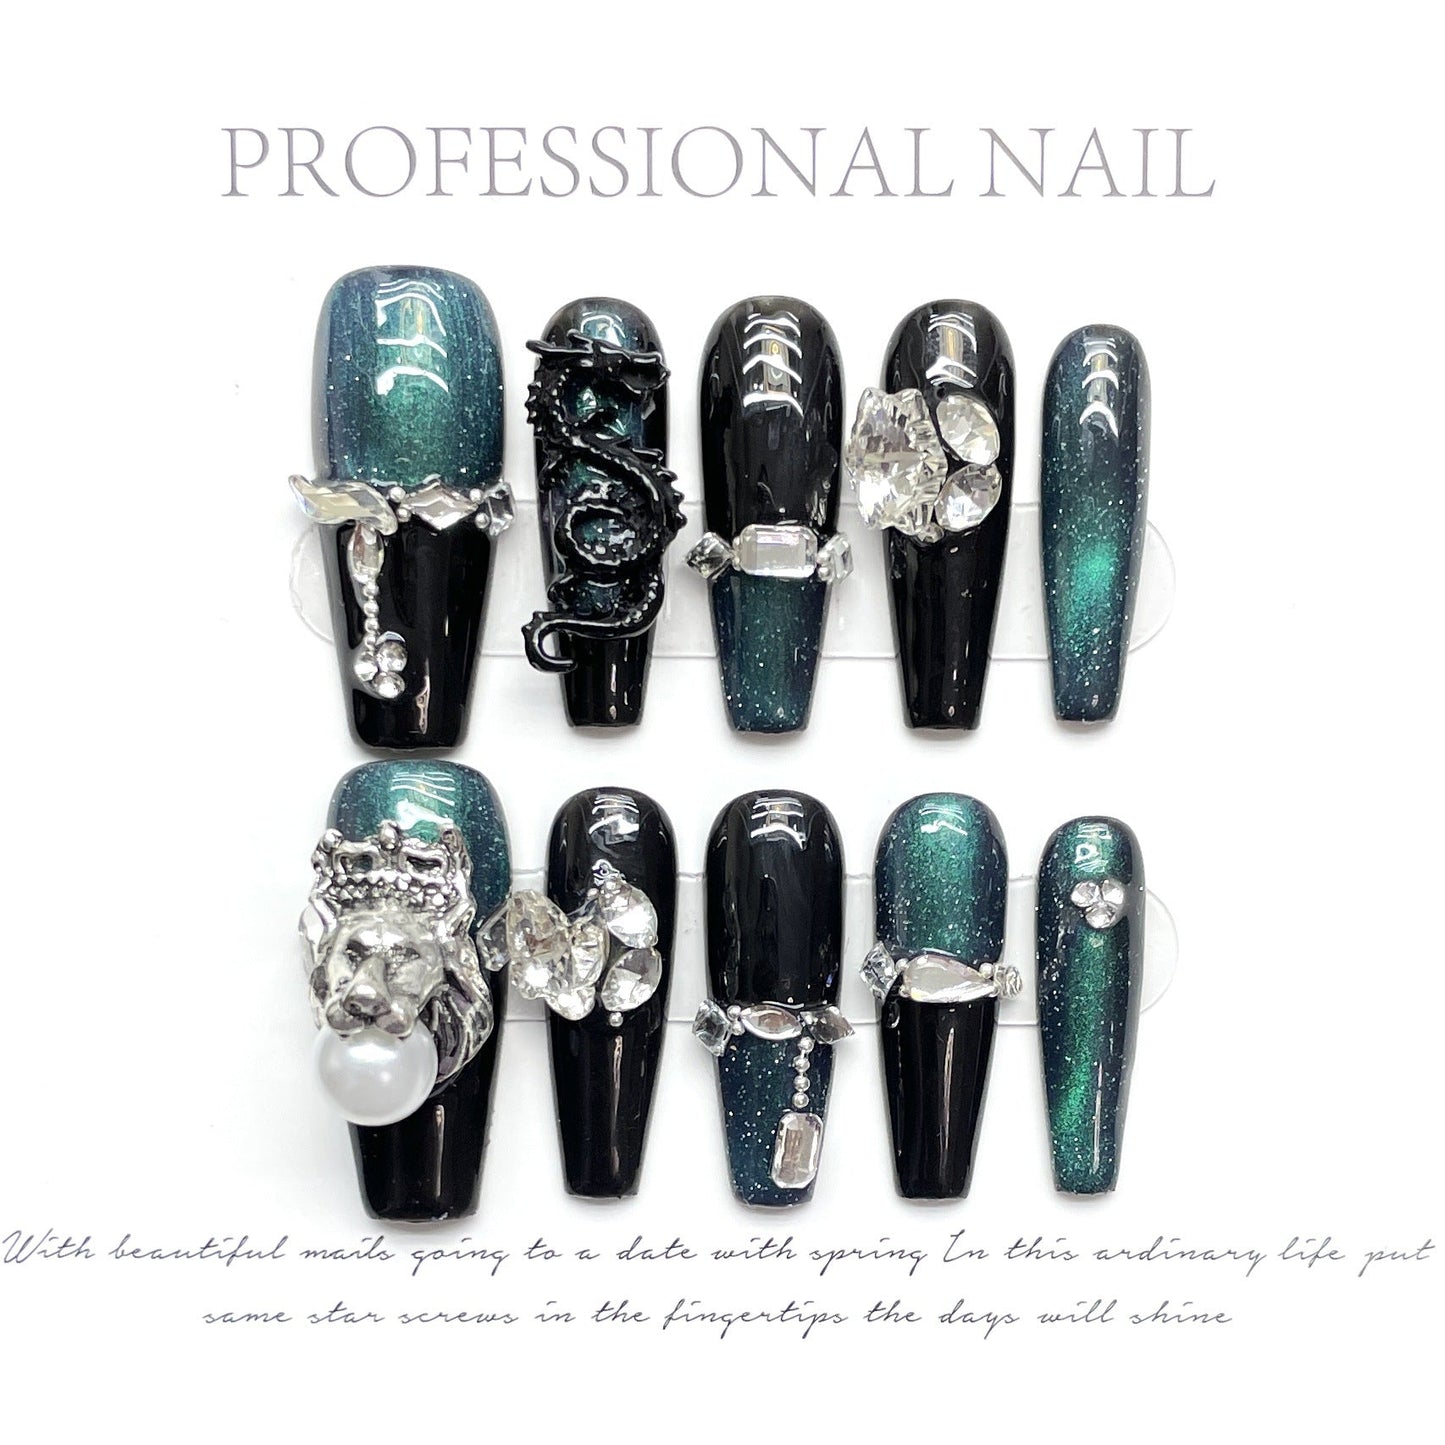 1388 Dragon lion Cateye Effect press on nails 100% handmade false nails black green